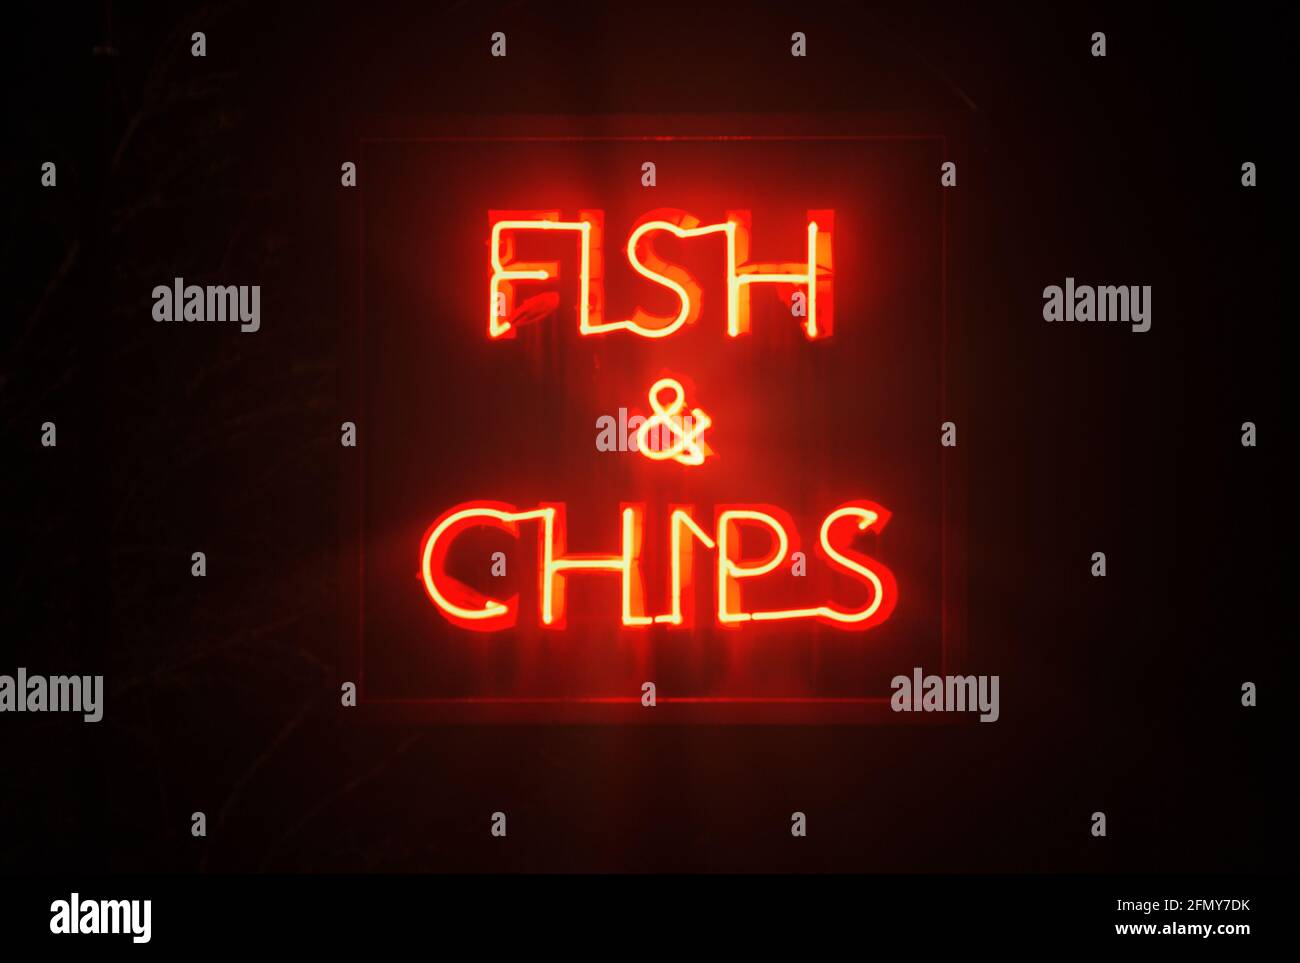 Glowing Orange Neon Fish And Chips Illuminated Sign At Night UK England Stock Photo